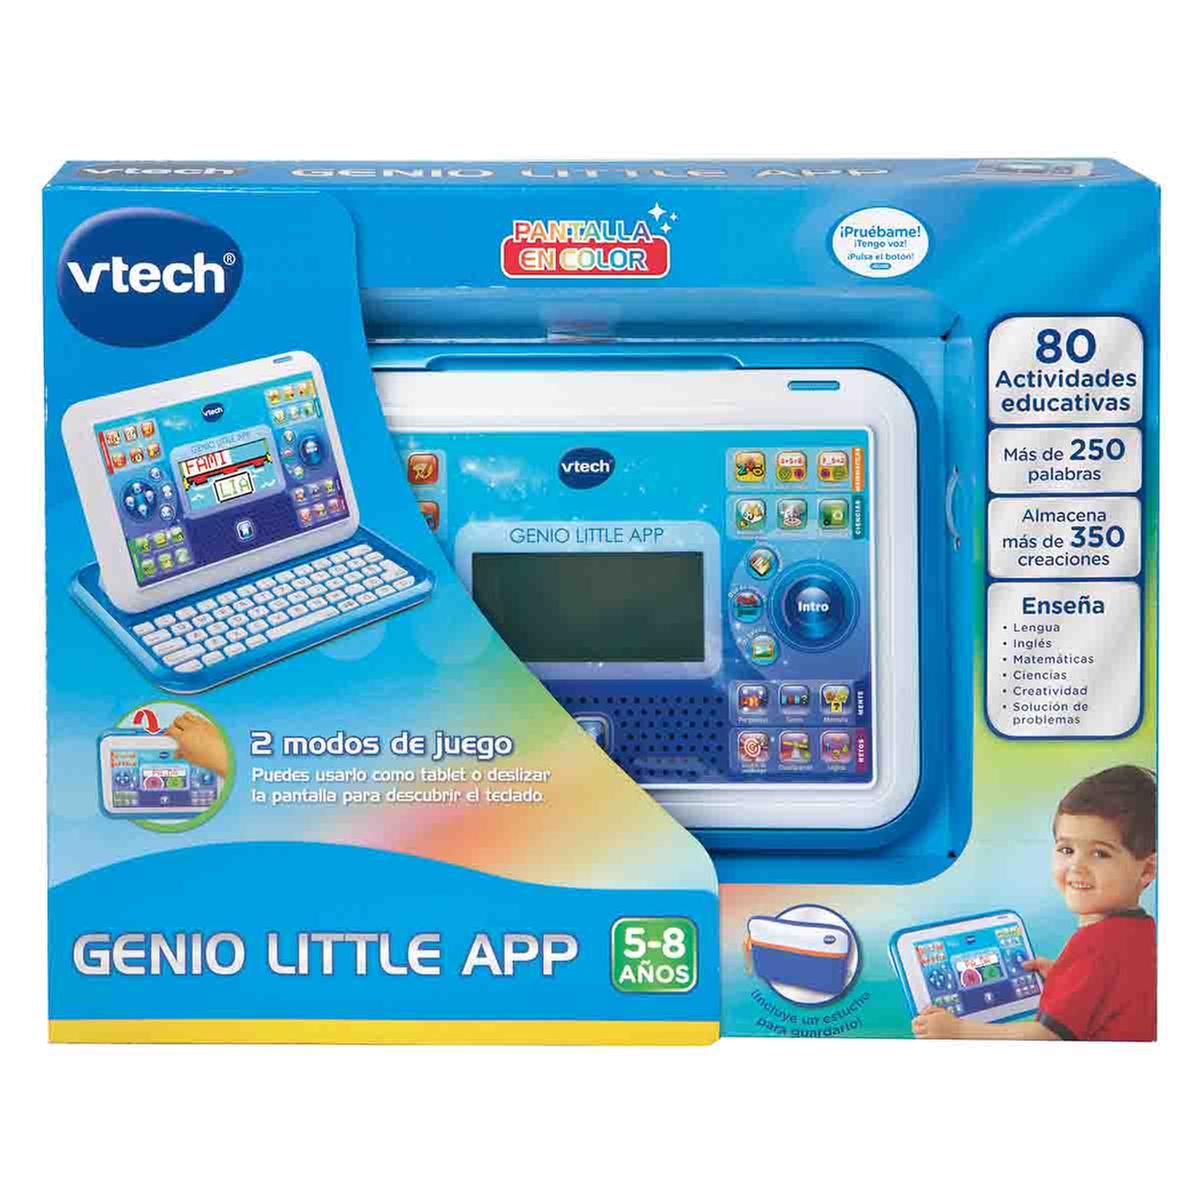 Acheter Genio Little App Ecran couleur Vtech 155522 - Juguetilandia